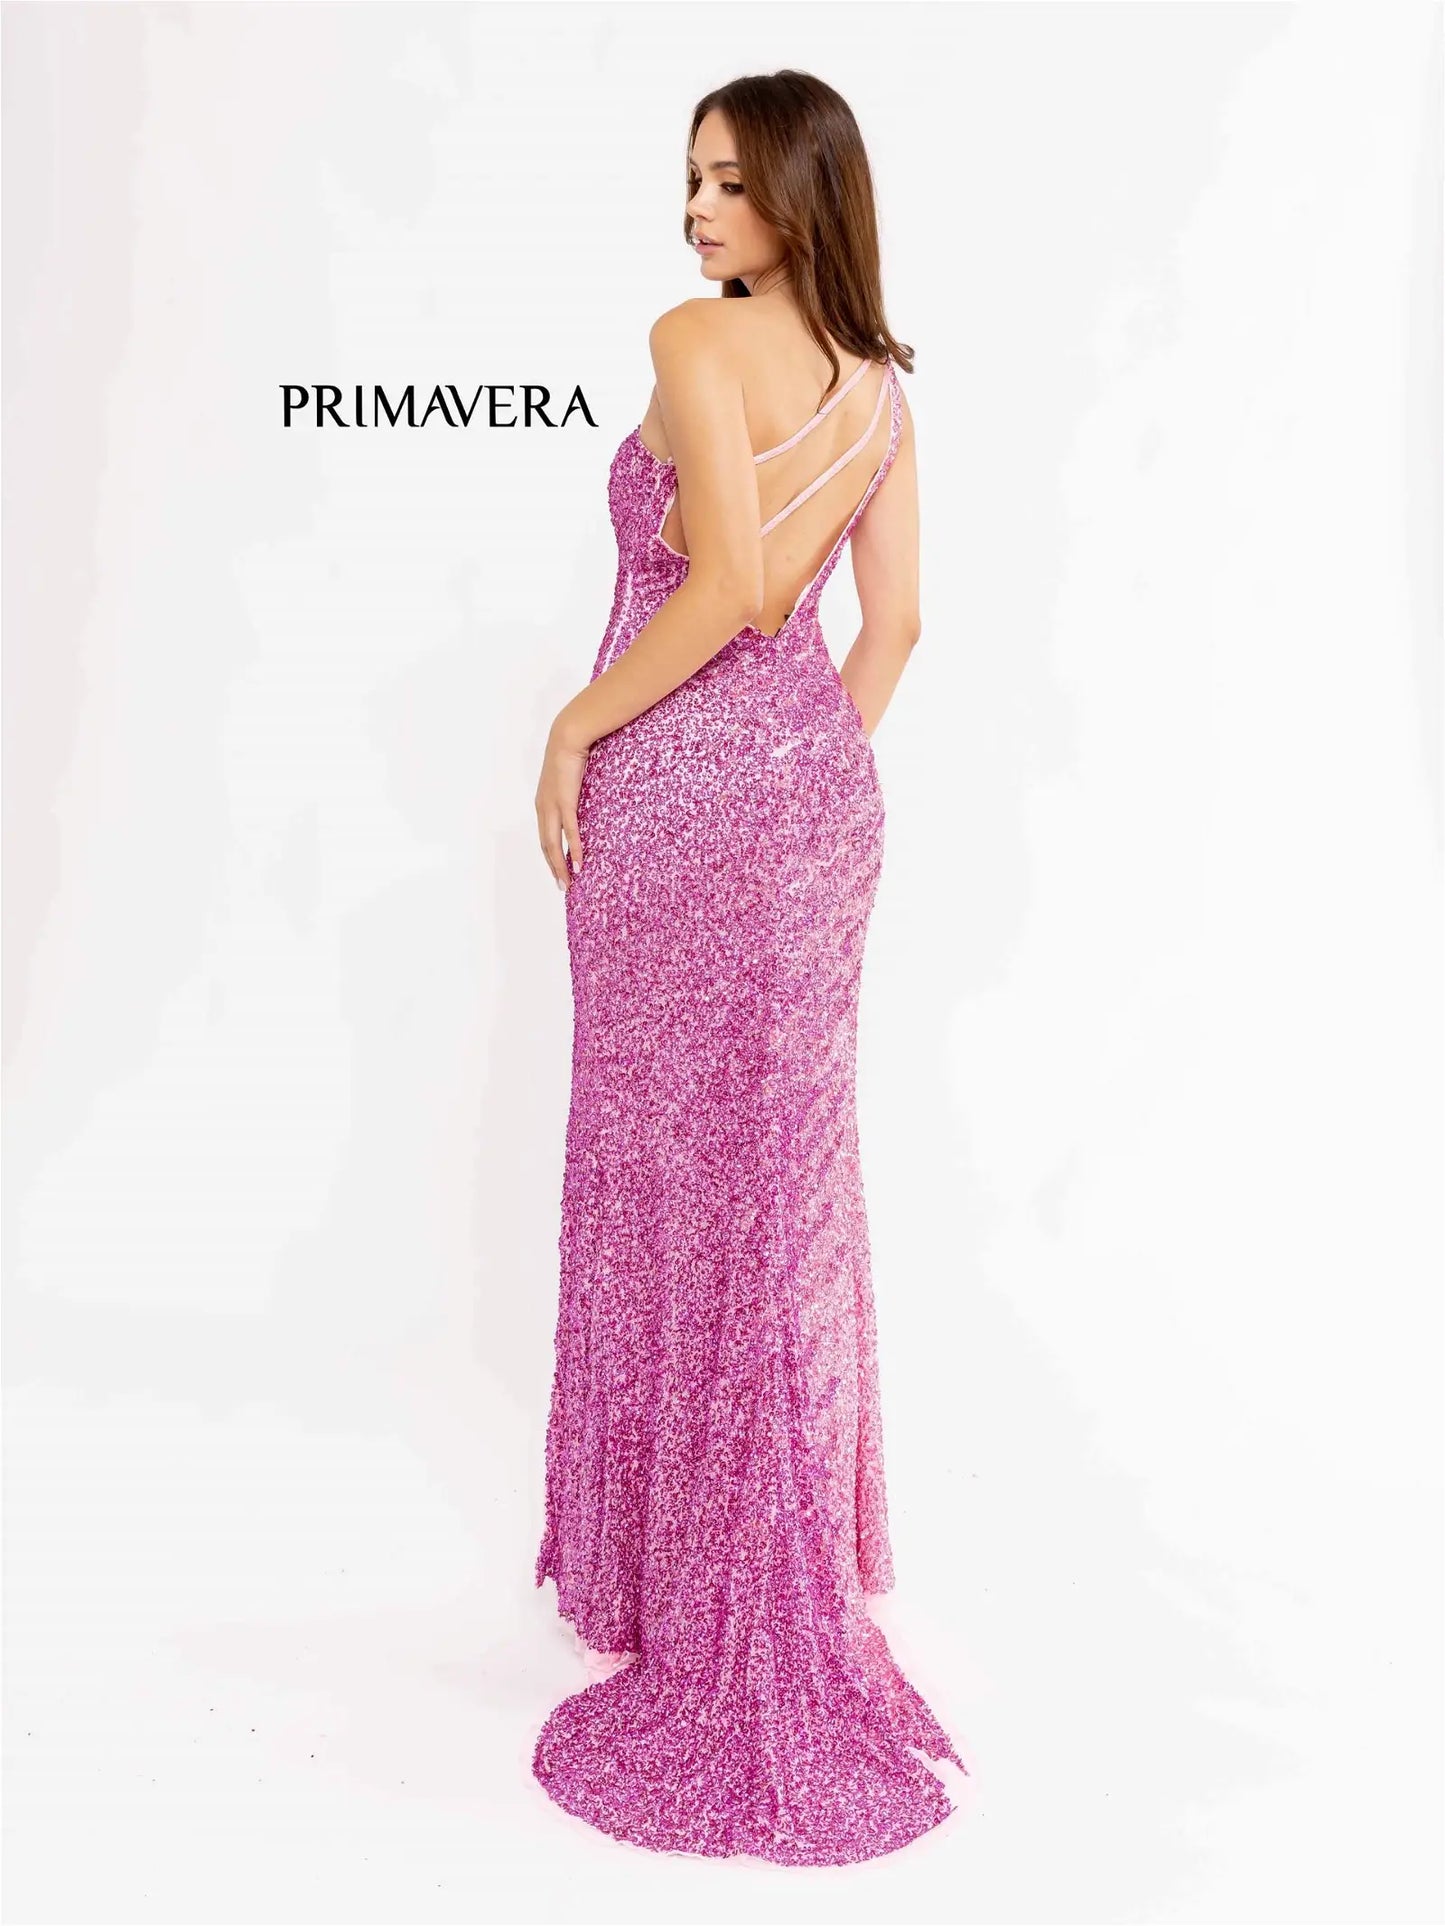 Primavera Couture 3944 Long One Shoulder Sequin Ombre Prom Dress Slit Pageant Gown  Sizes: 000,00,2,4,6,8,10,12,14,16,18,20,22,24  Colors:  LAVENDER, ROYAL BLUE, PINK, BLACK